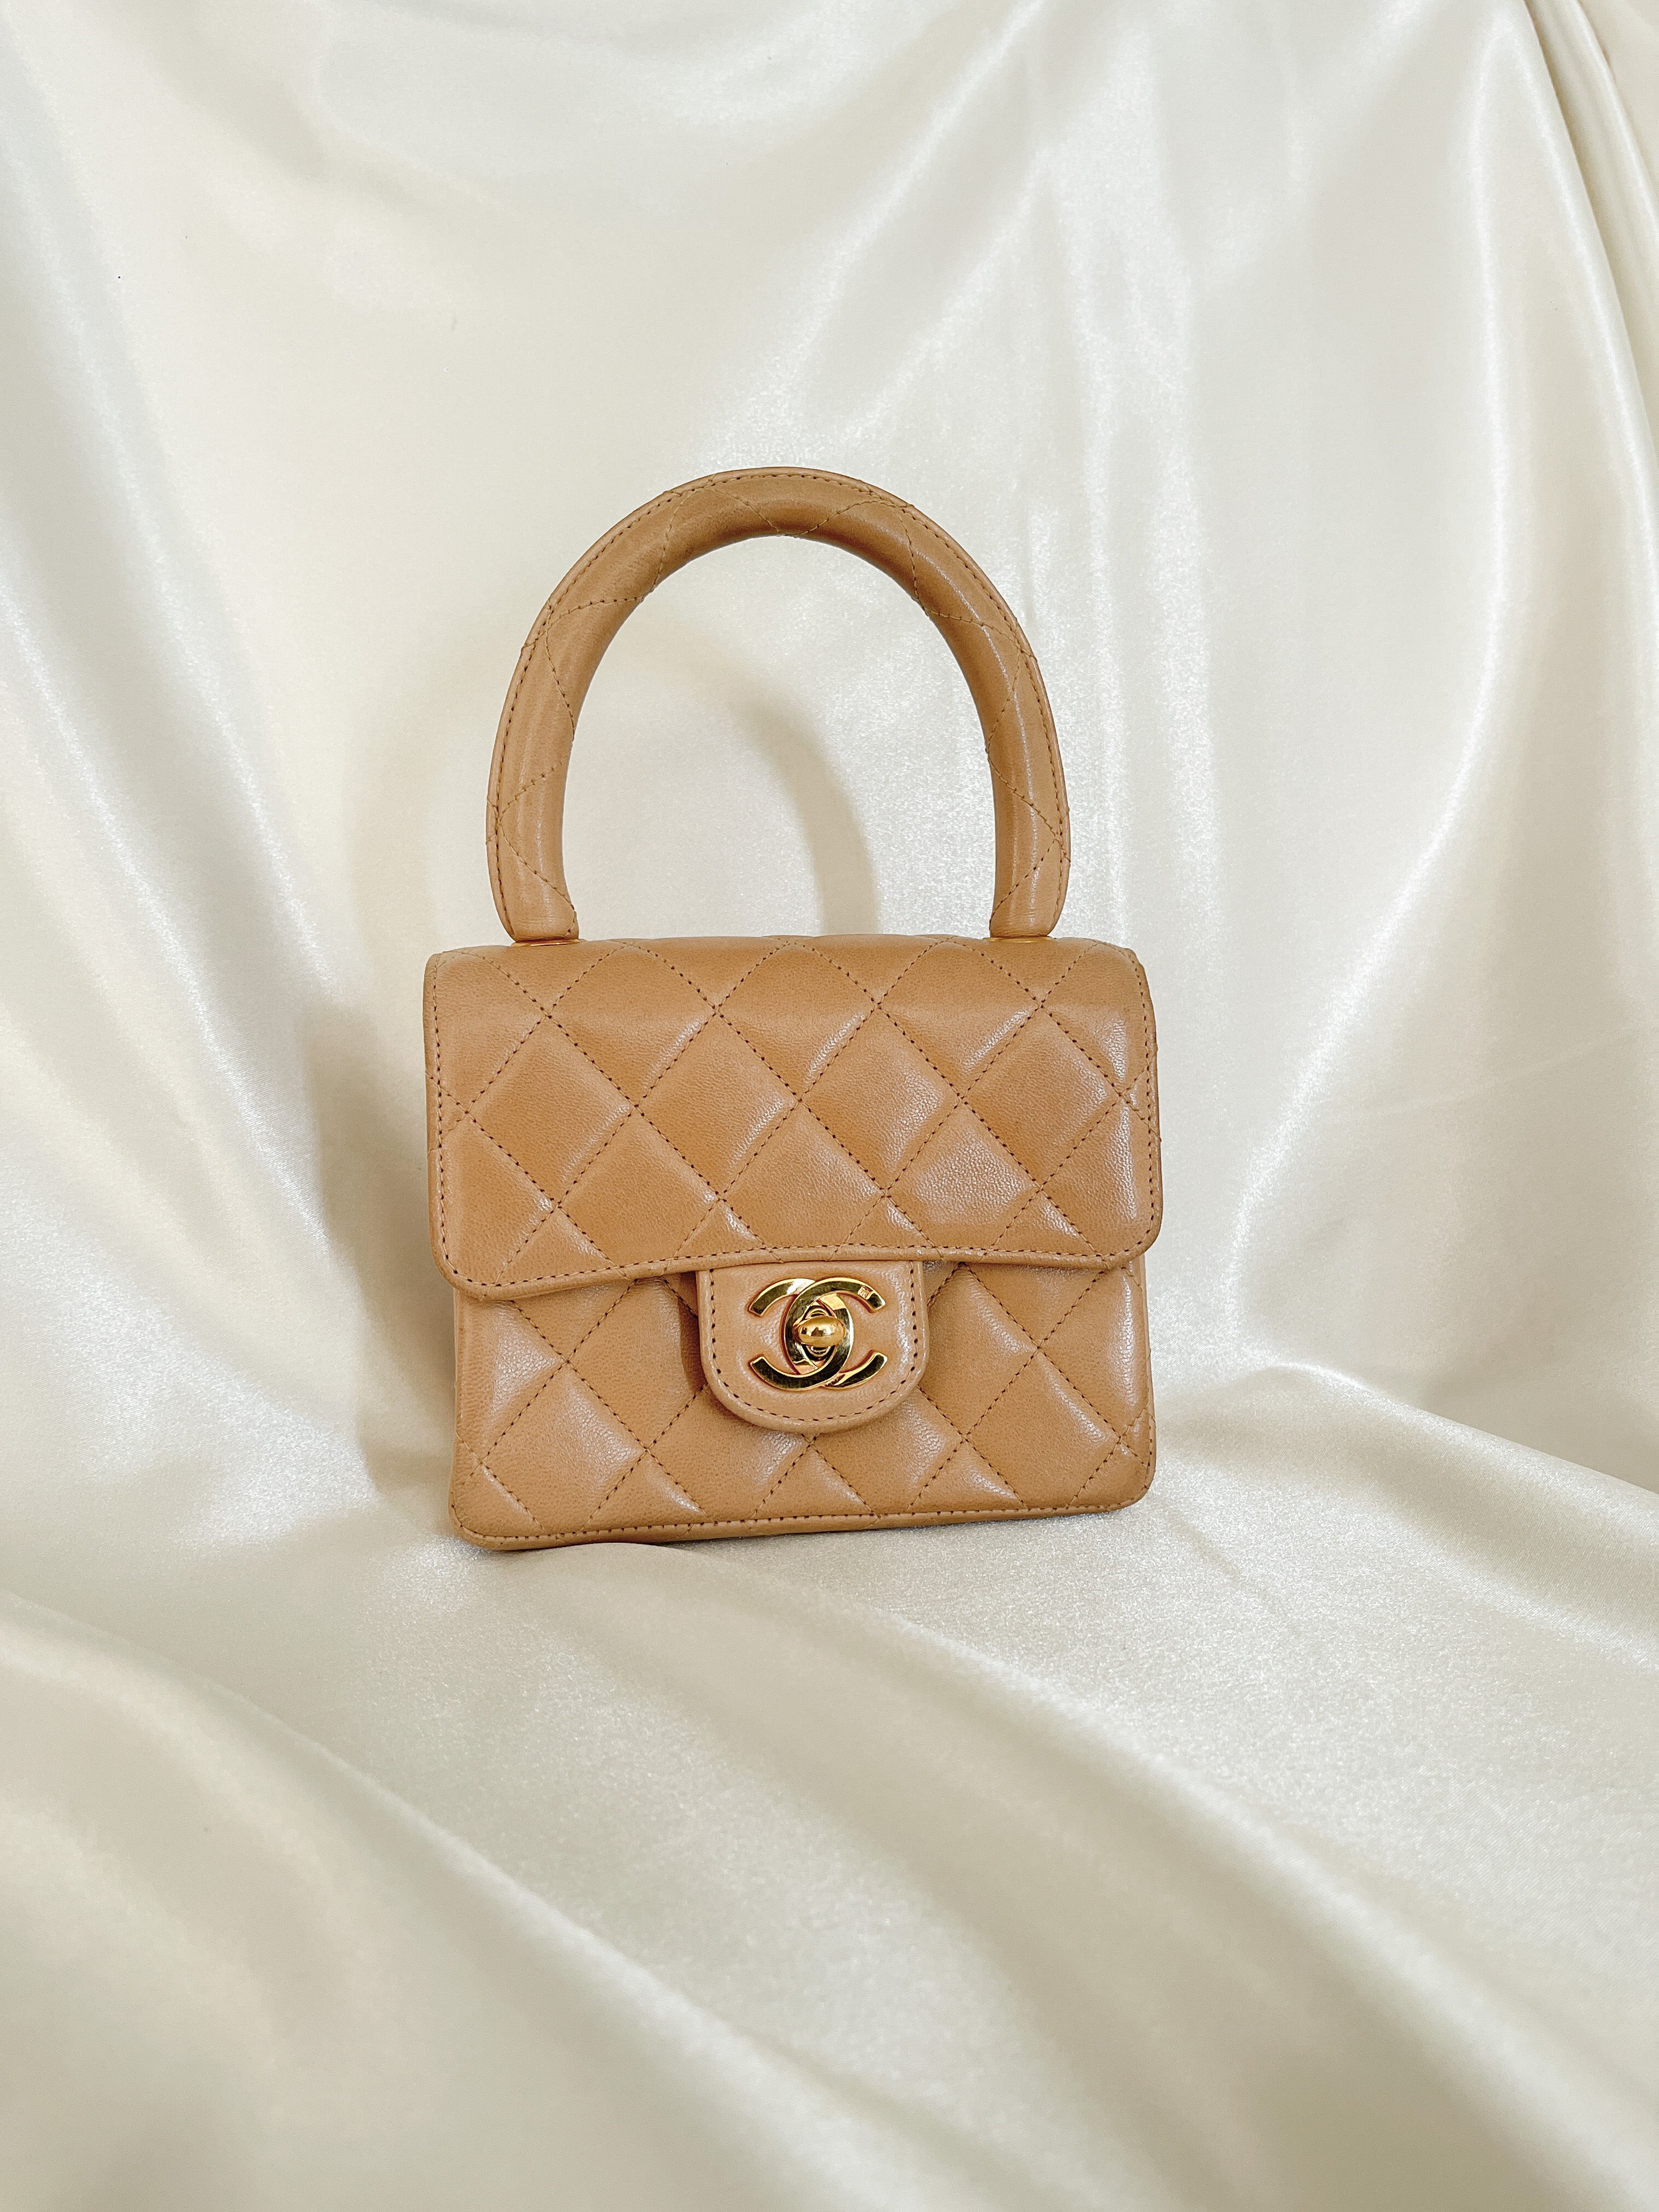 1989 Chanel Bag - 187 For Sale on 1stDibs